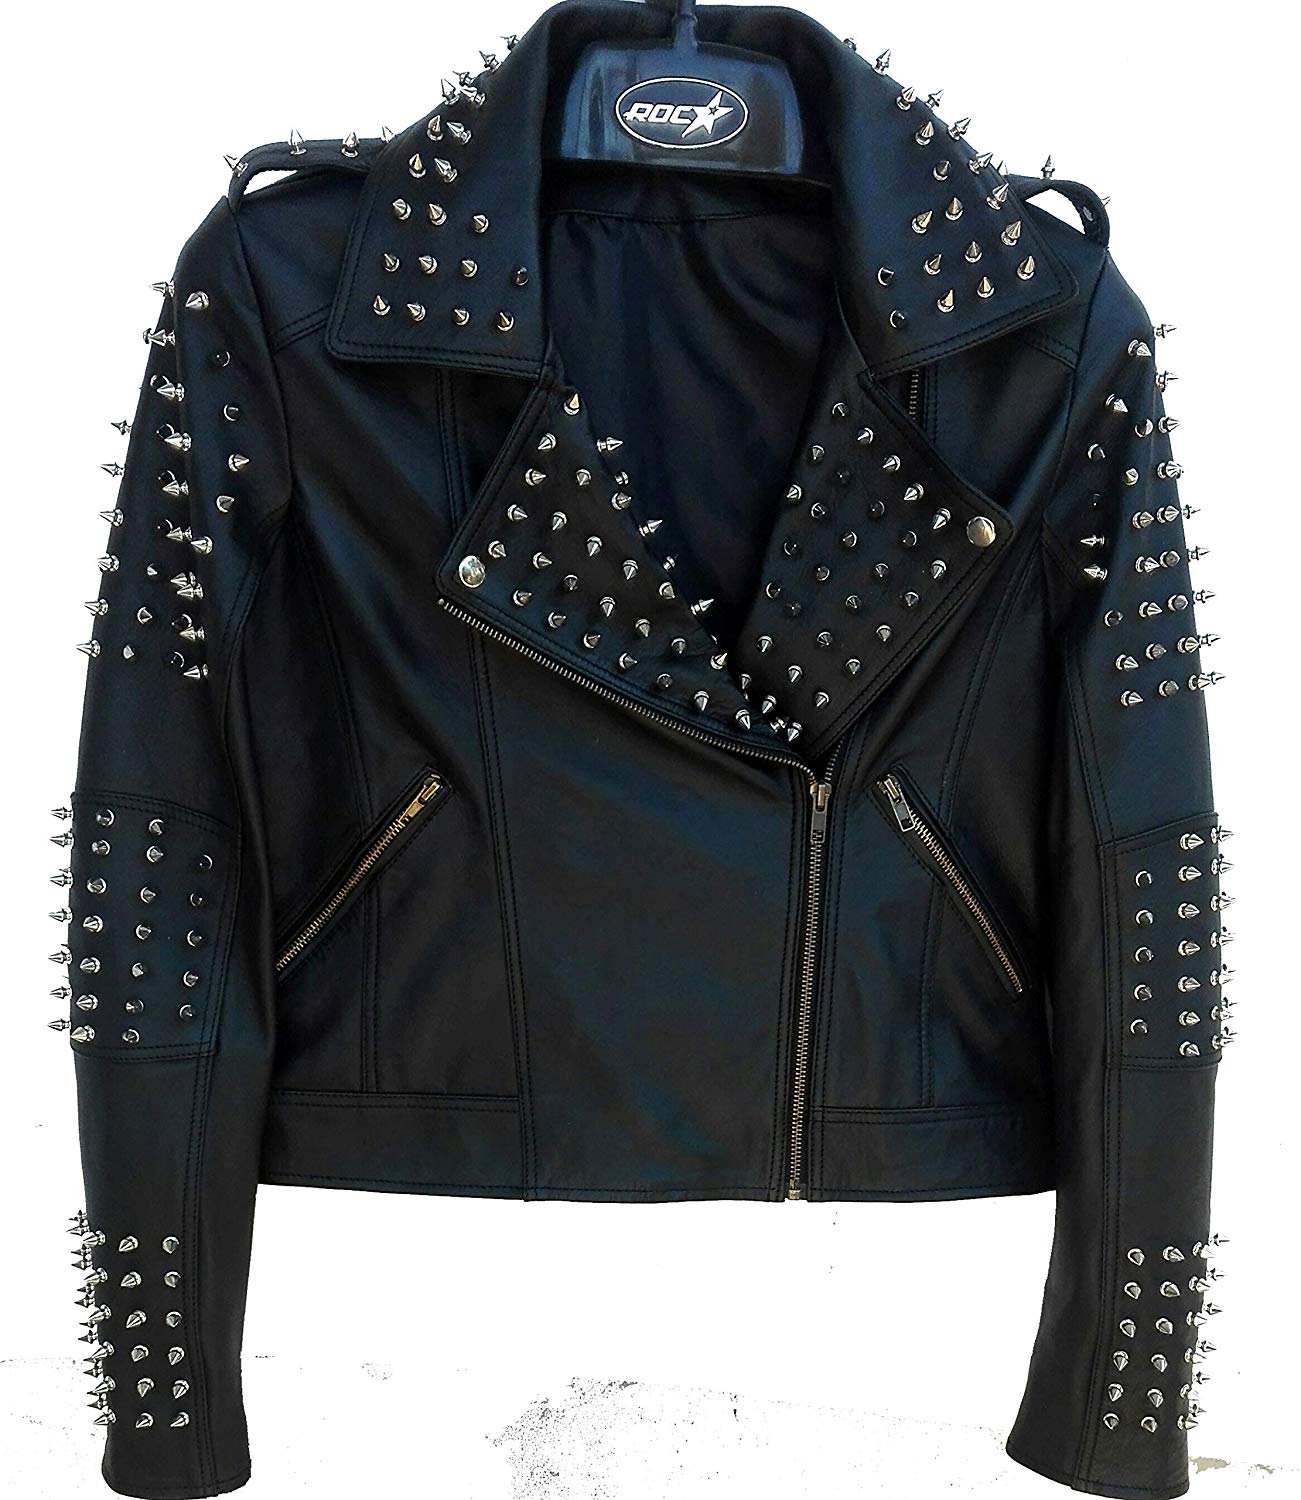 Spiked Biker Black Leather Jacket - A2 Jackets